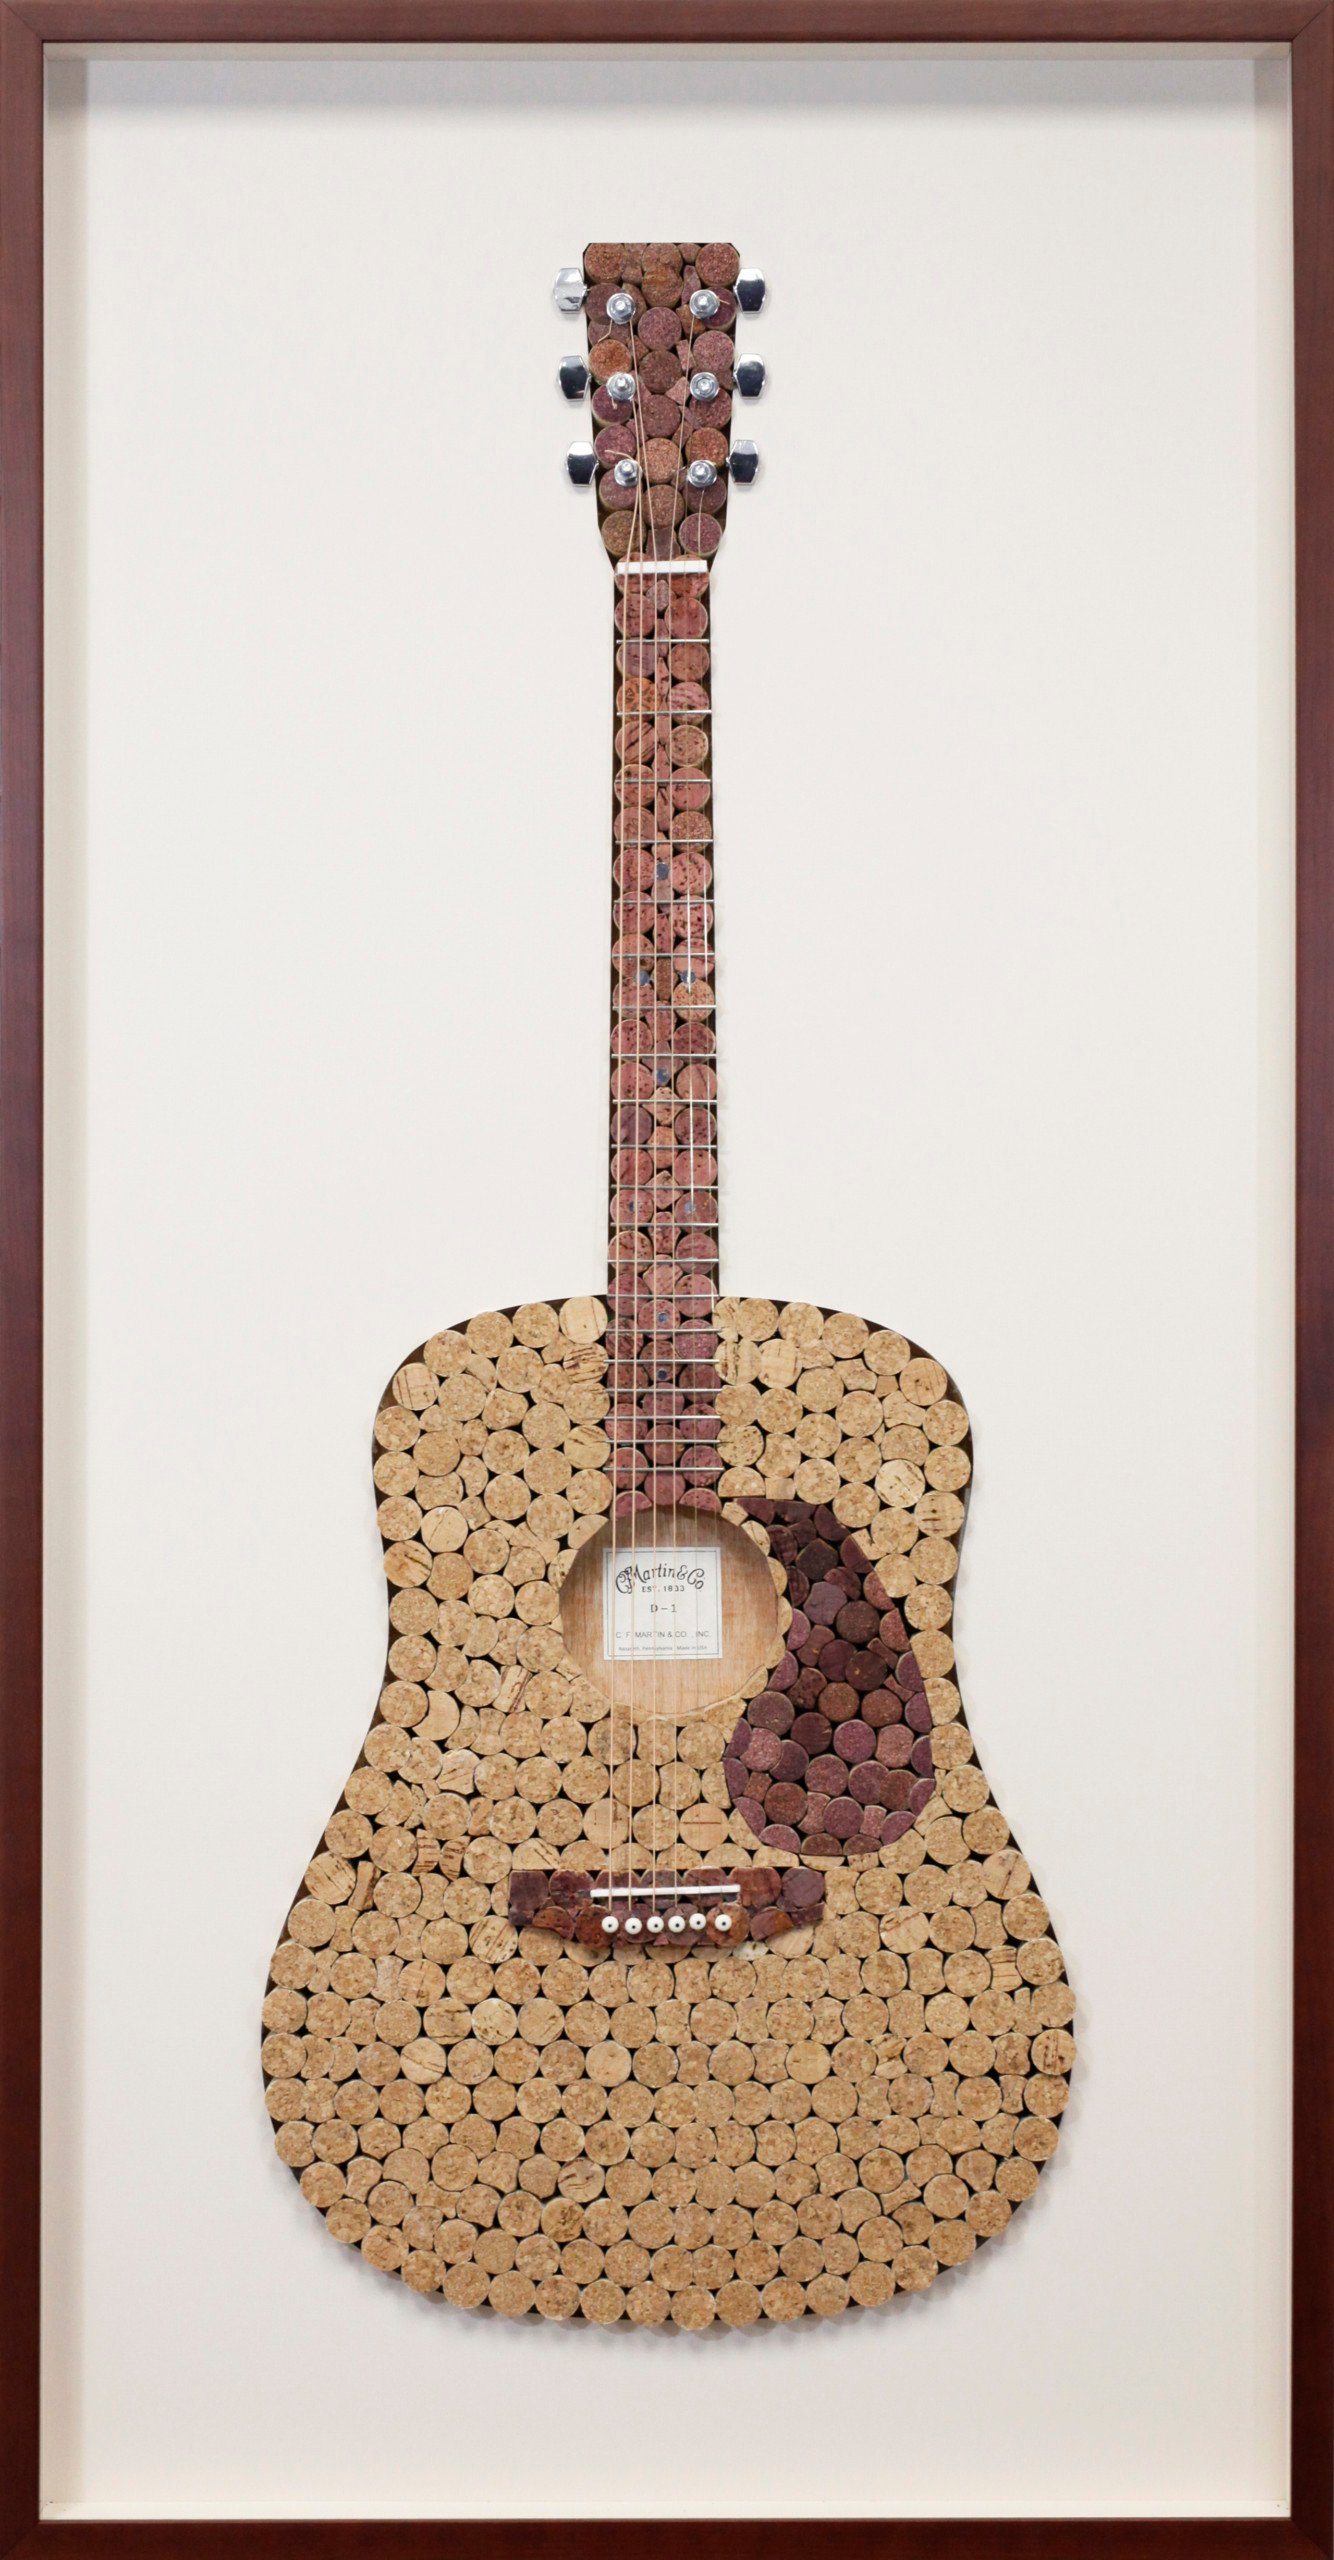 Custom Framed Art Cork Guitar Hall of Frames Arizona